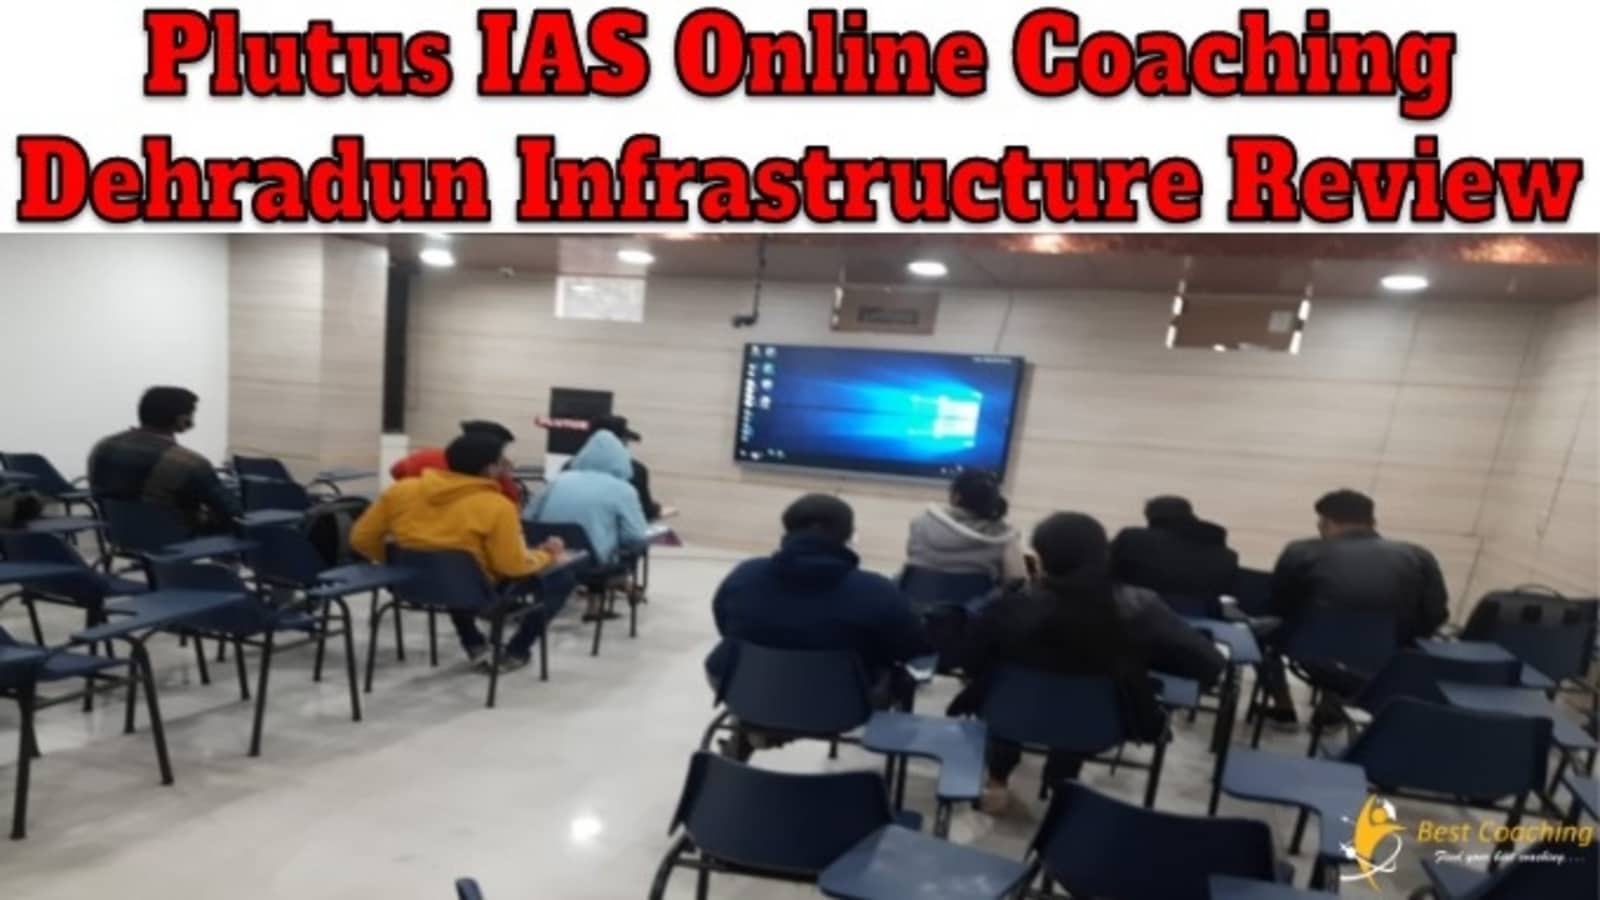 Plutus IAS Online Coaching Dehradun Infrastructure Review